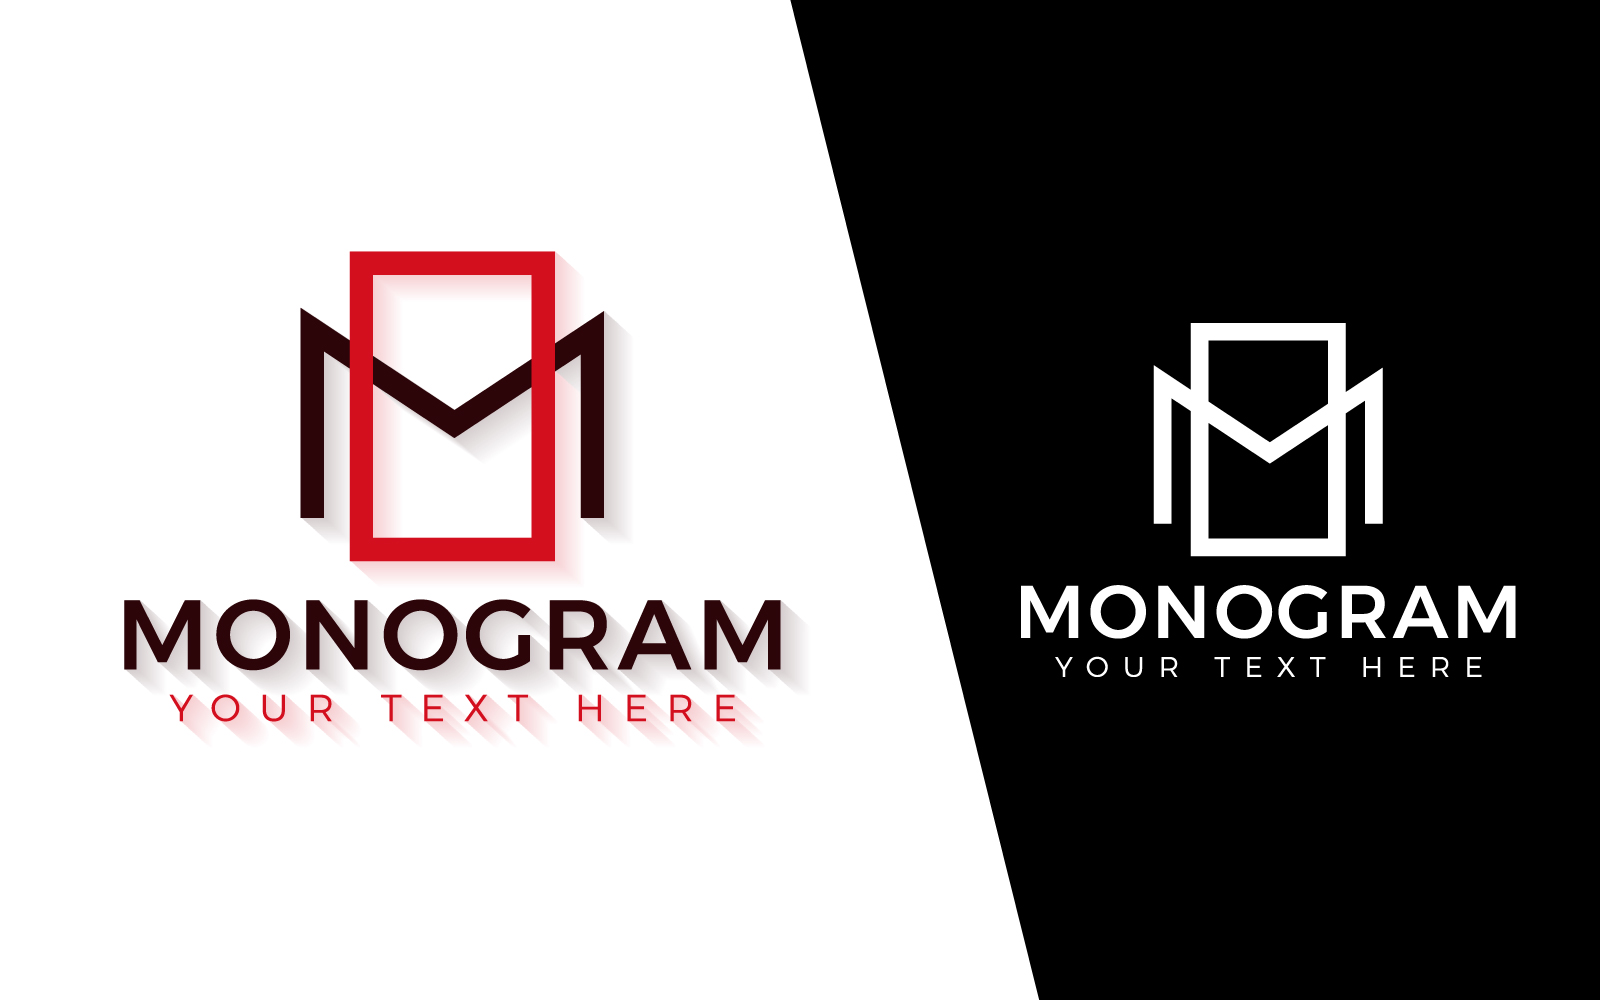 Vector Monogram M logo design, monogram logo, m logo